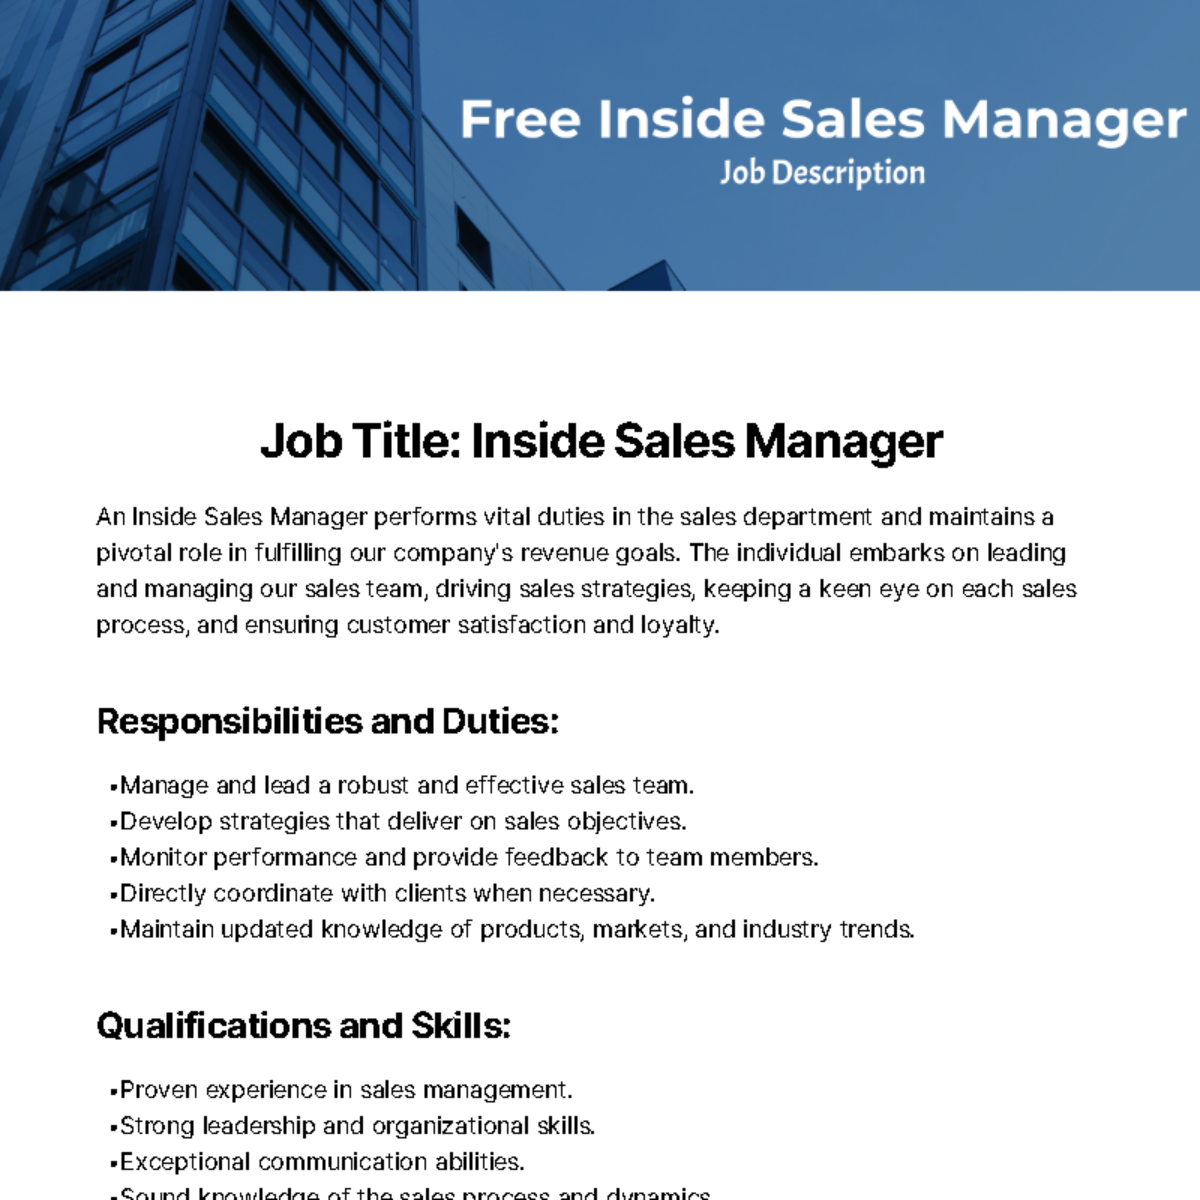 Free Inside Sales Manager Job Description Template